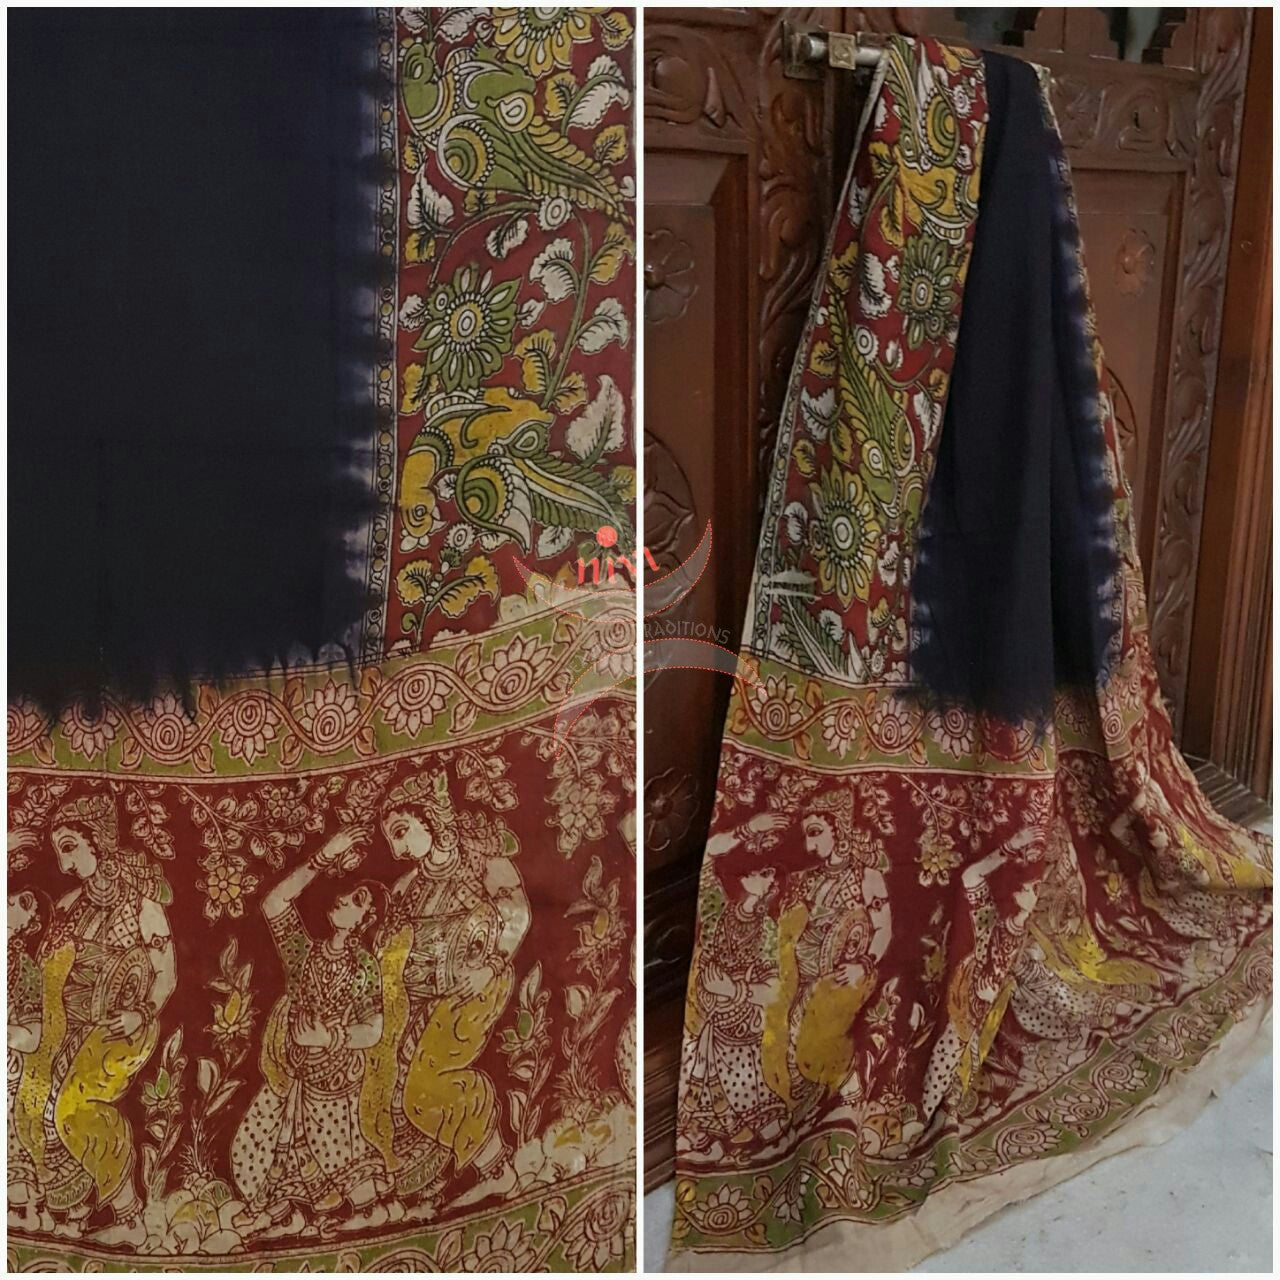 Black Handloom Mul cotton kalamkari duppata with Radha Krishna and parrot motif